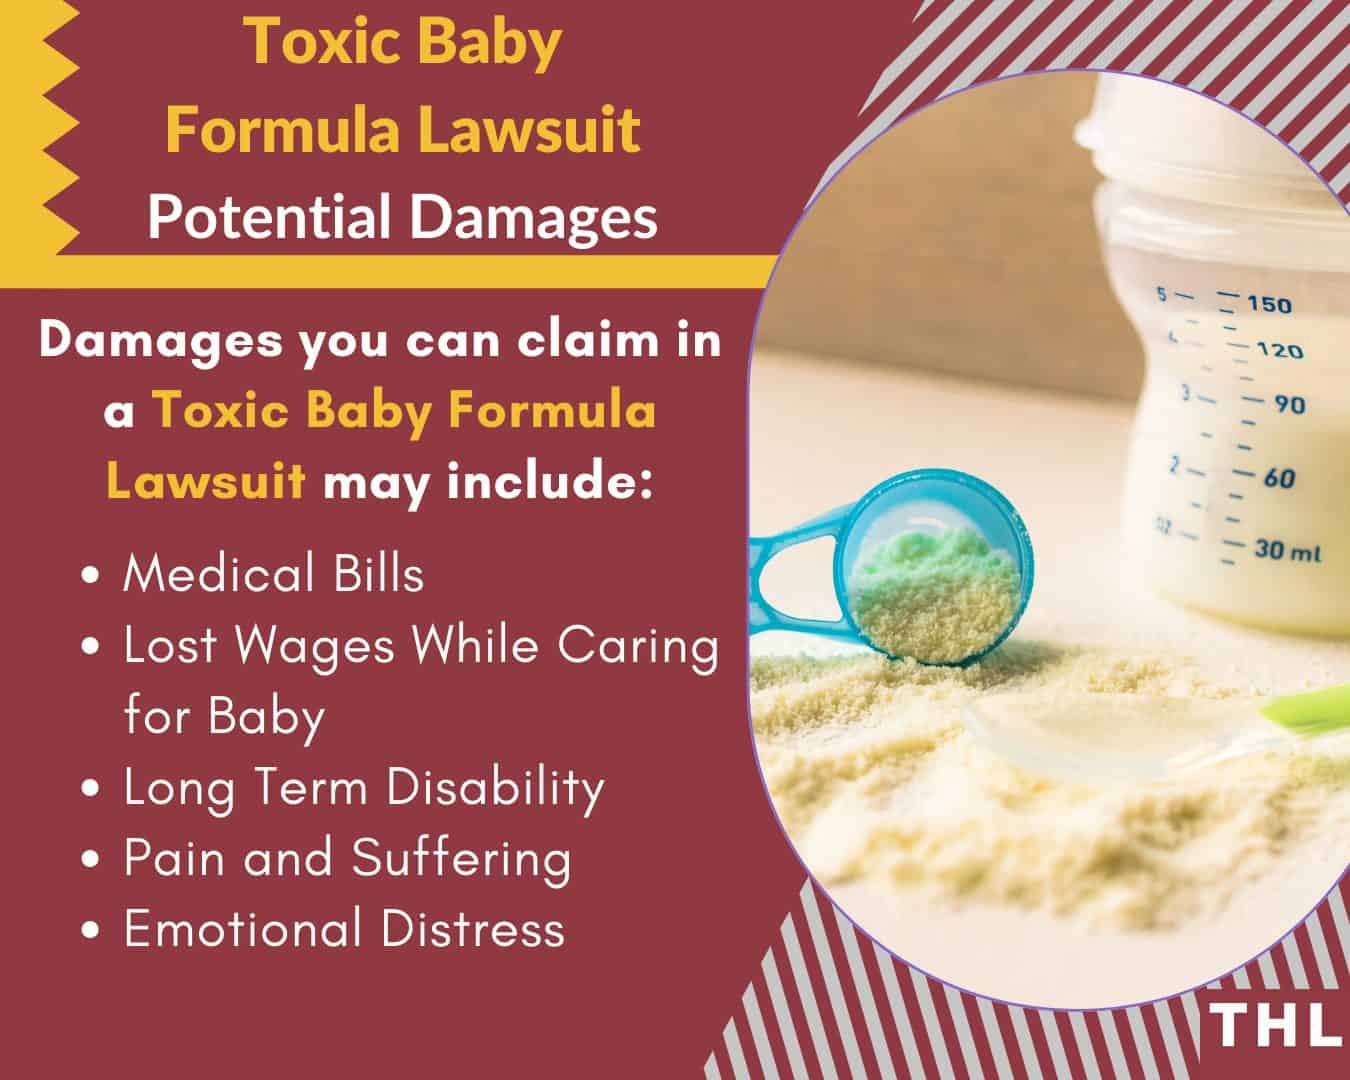 Toxic Baby Formula NEC Lawsuit potential damages